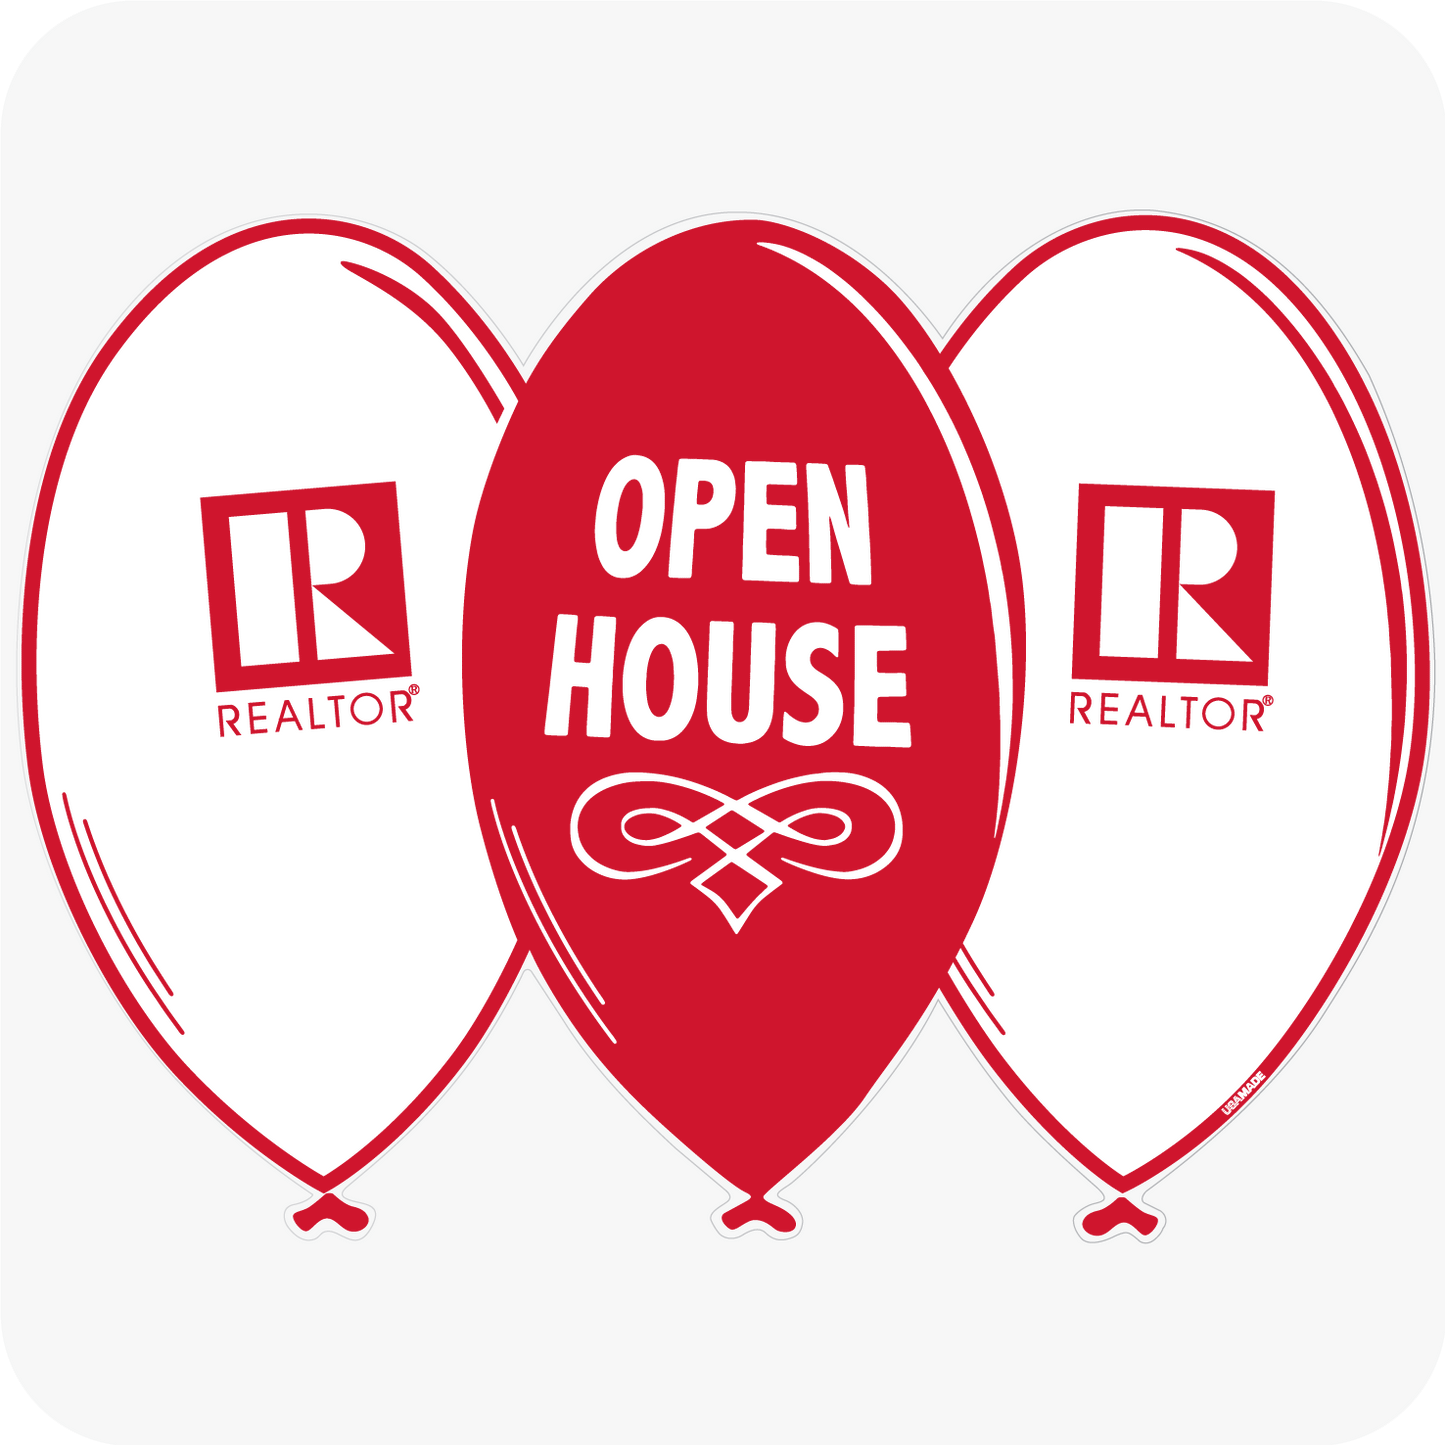 Open House & Realtor Logo - Corrugated Balloon 24 x 18 - Red